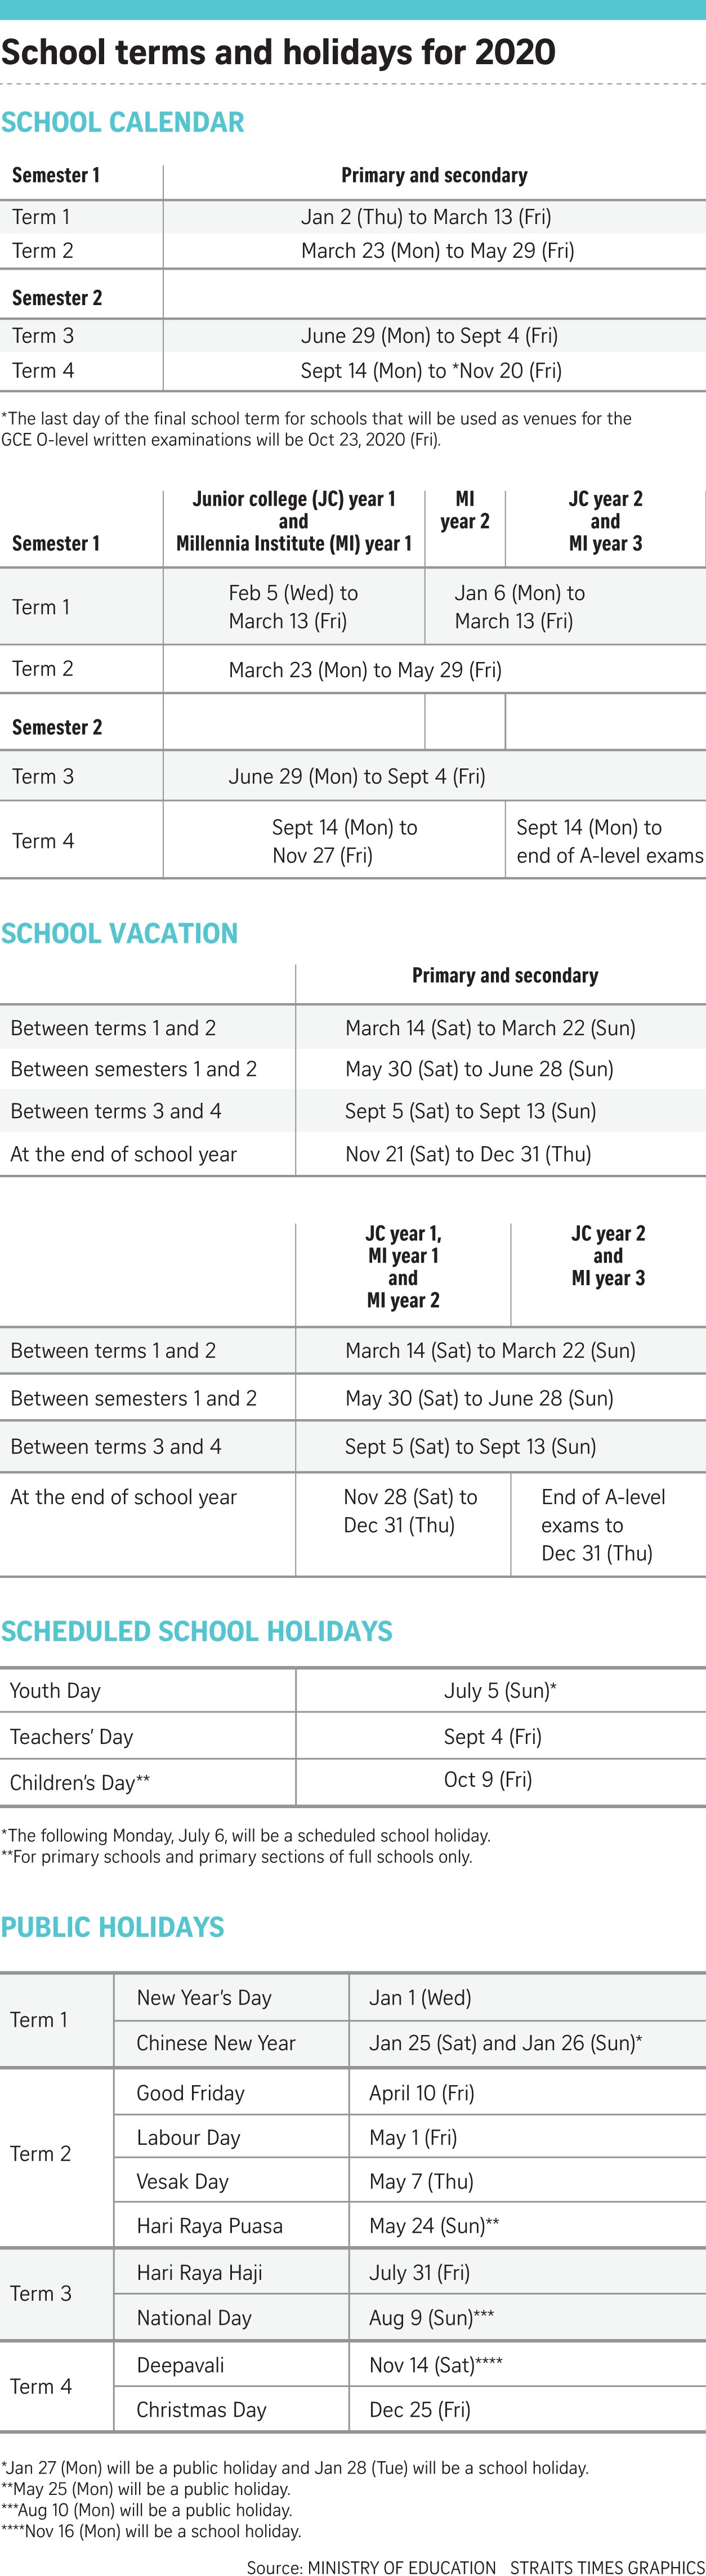 Moe Releases Calendar For 2020 School Year, Education News intended for Yamaha Calendar 2020 Singapore